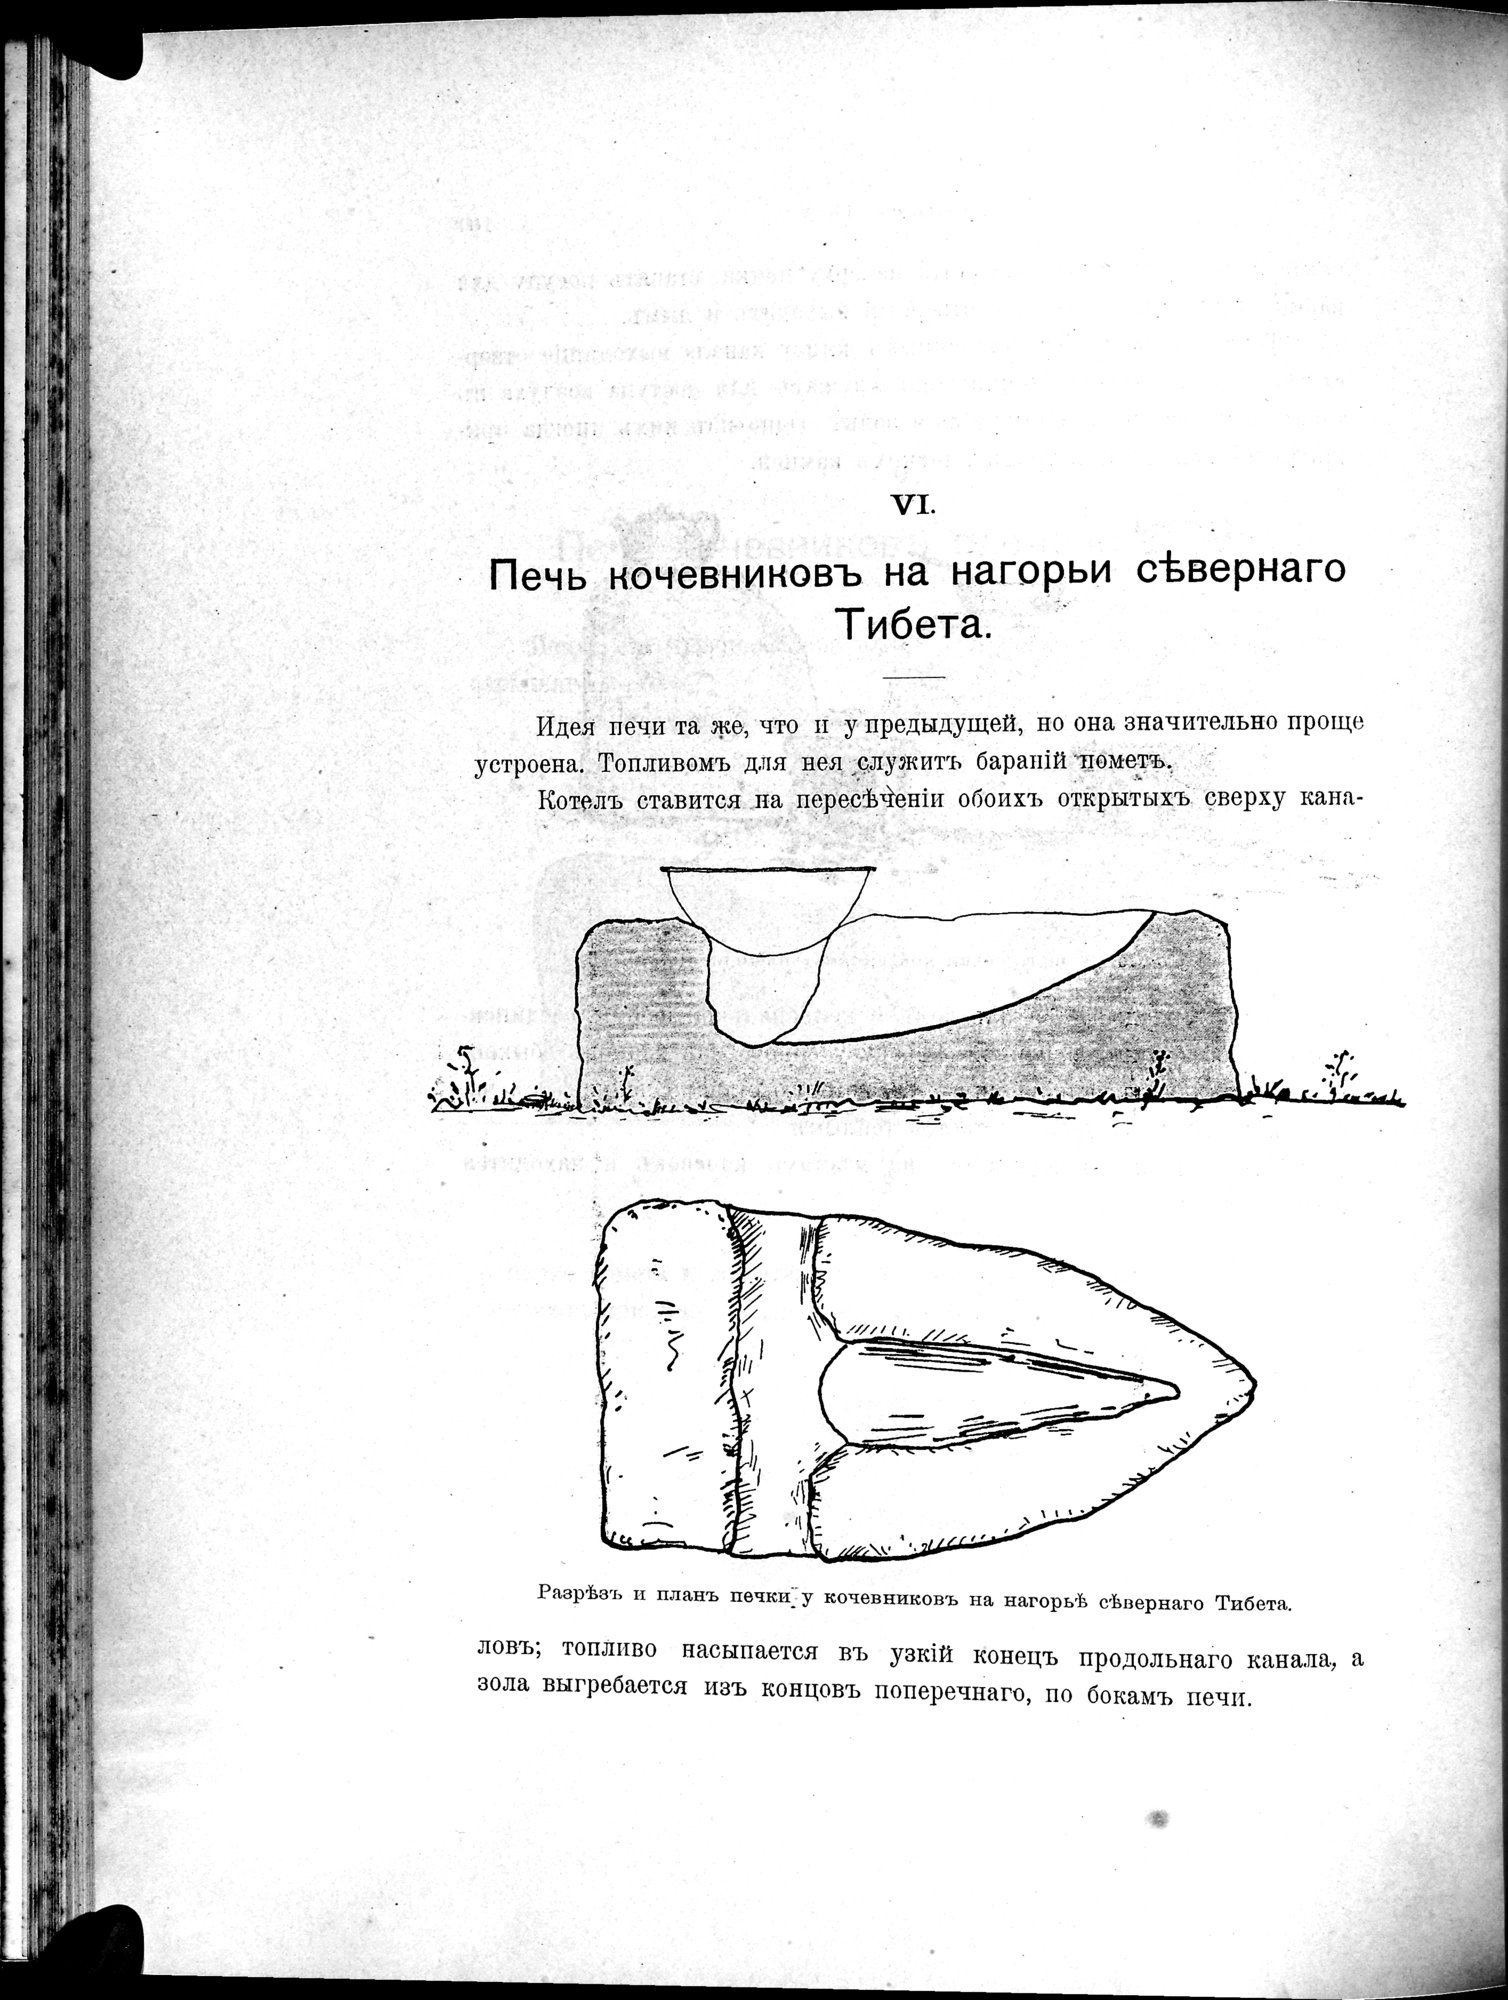 Mongoliia i Kam : vol.3 / 132 ページ（白黒高解像度画像）